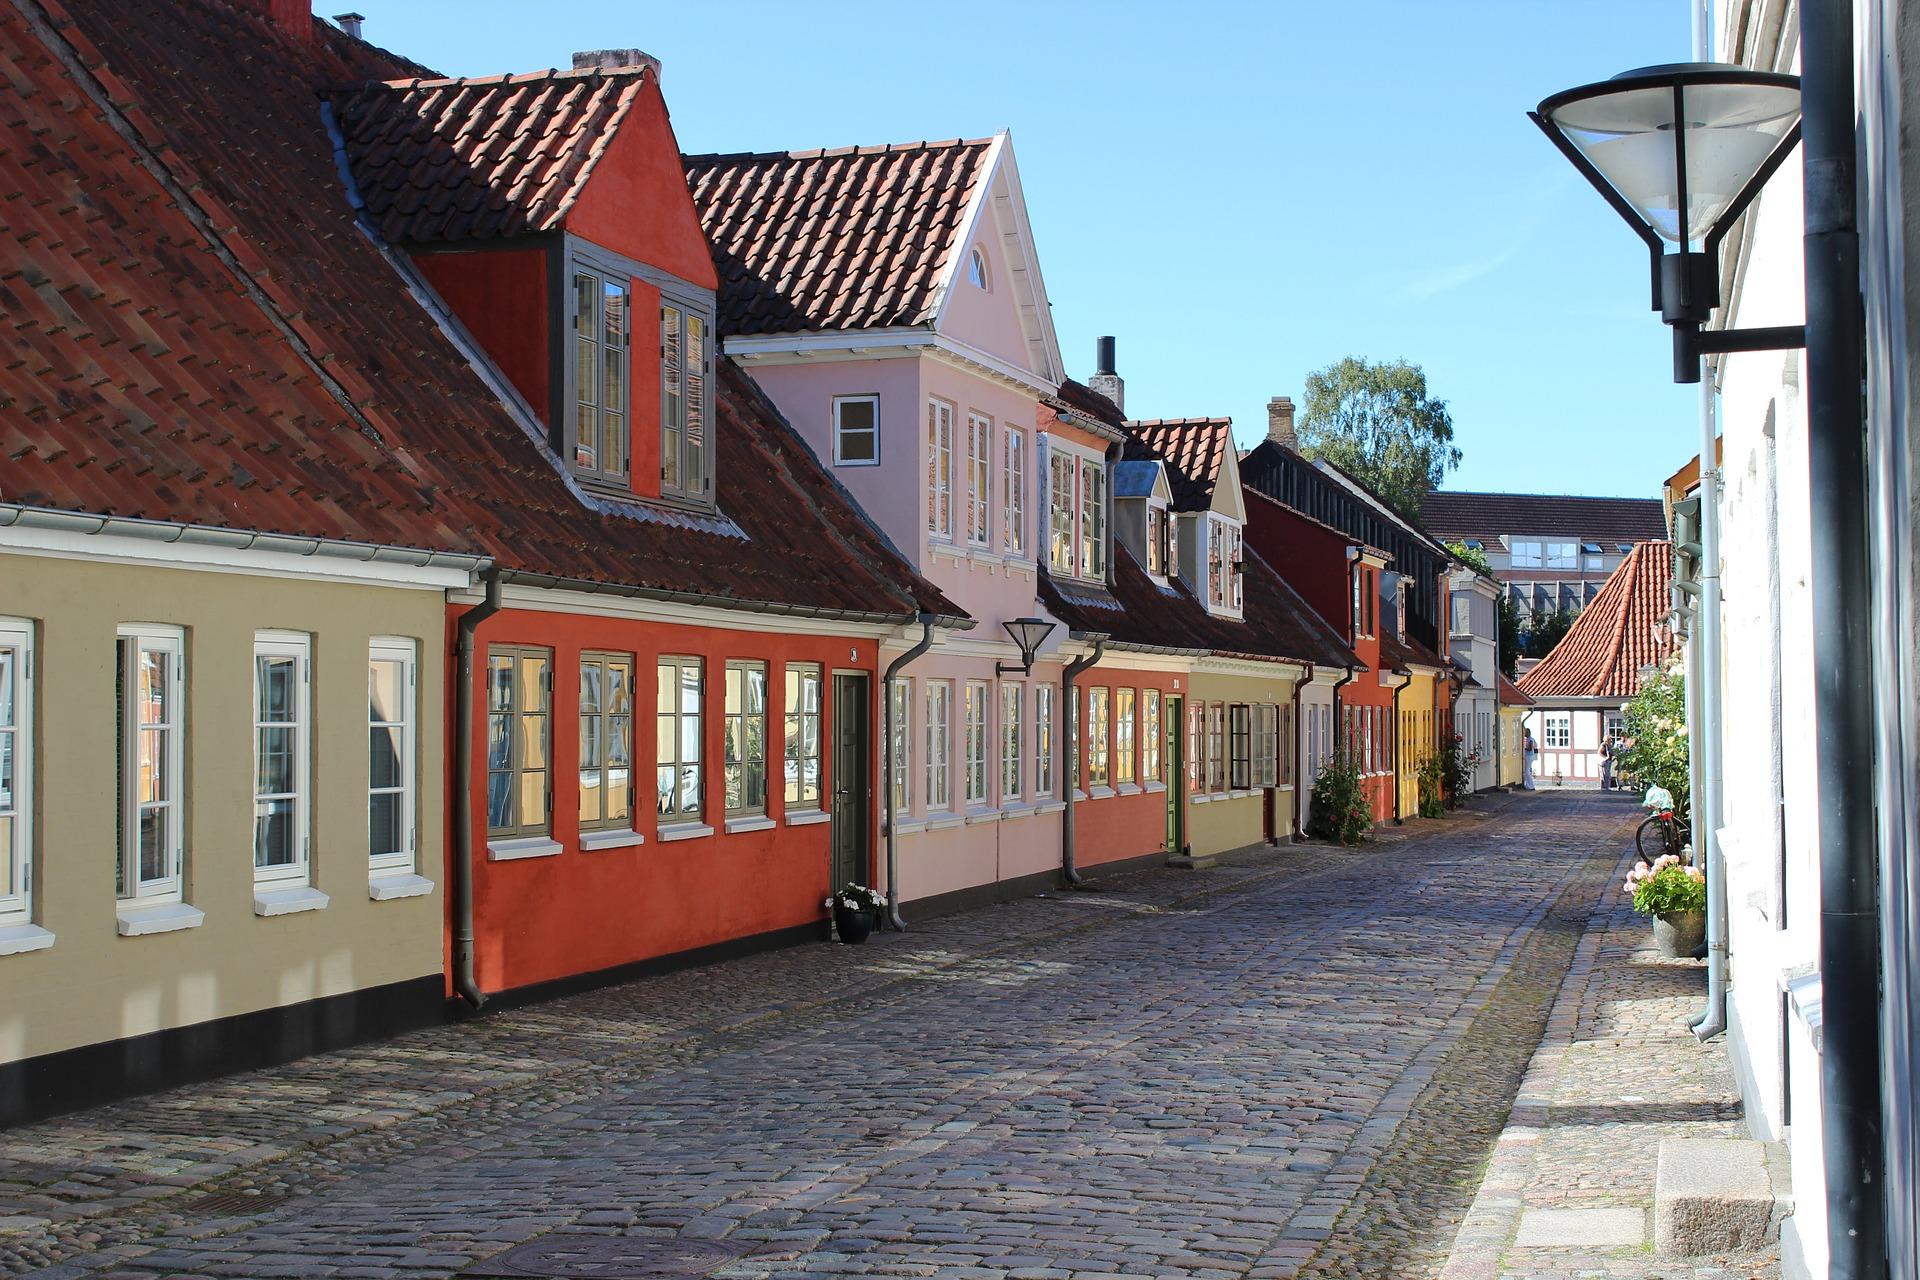 Odense on a sunny day